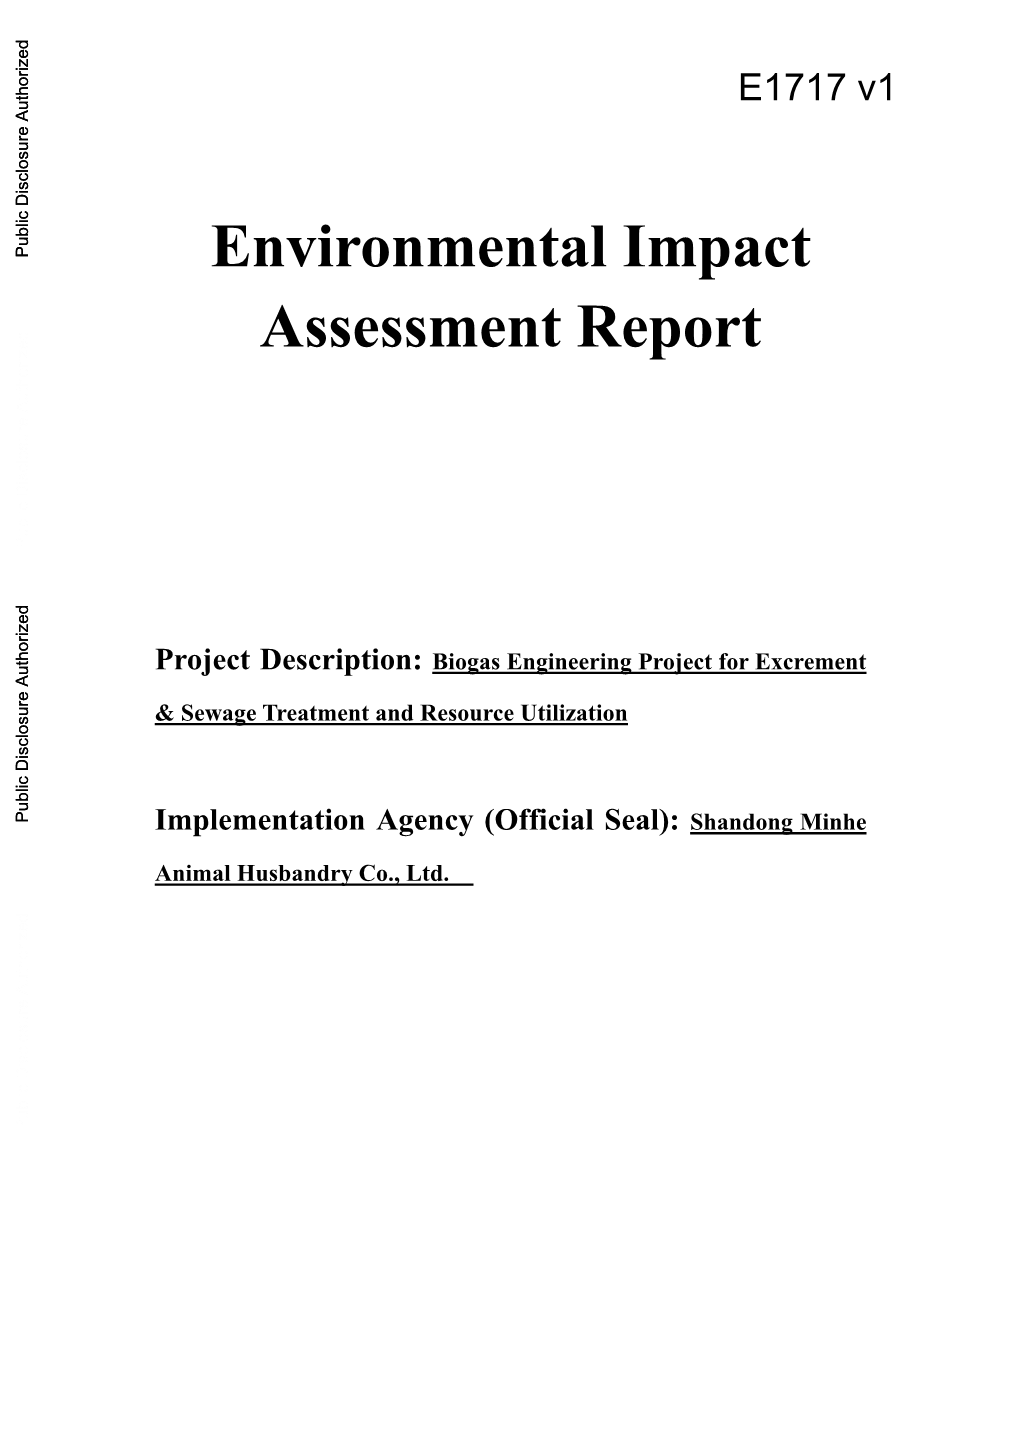 Environmental Impact Assessment Report Form